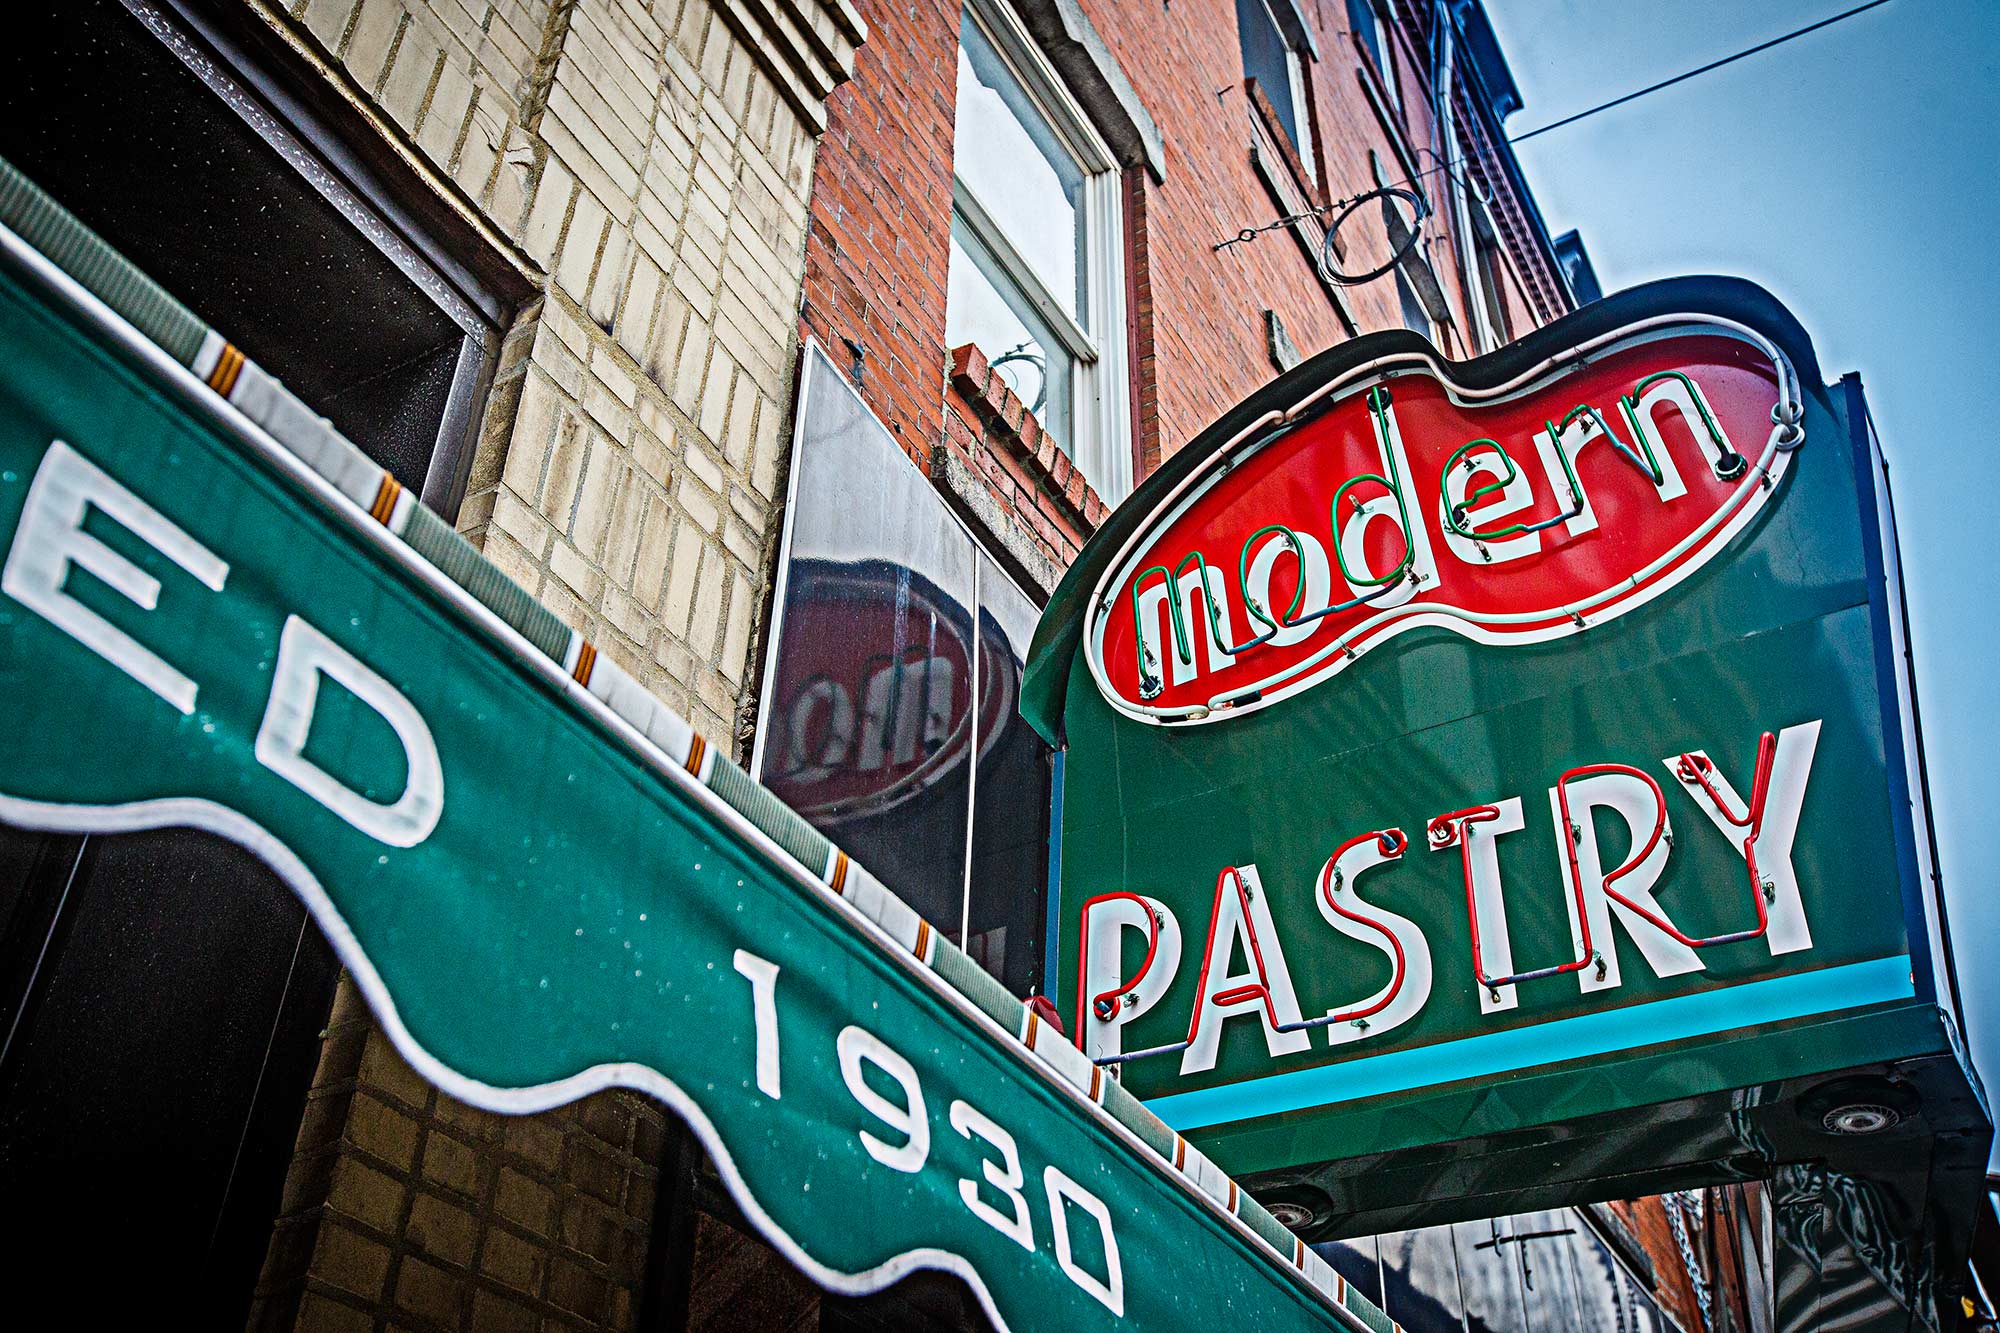 Modern Pastry, Hanover St. Boston, MA - 3/30/15